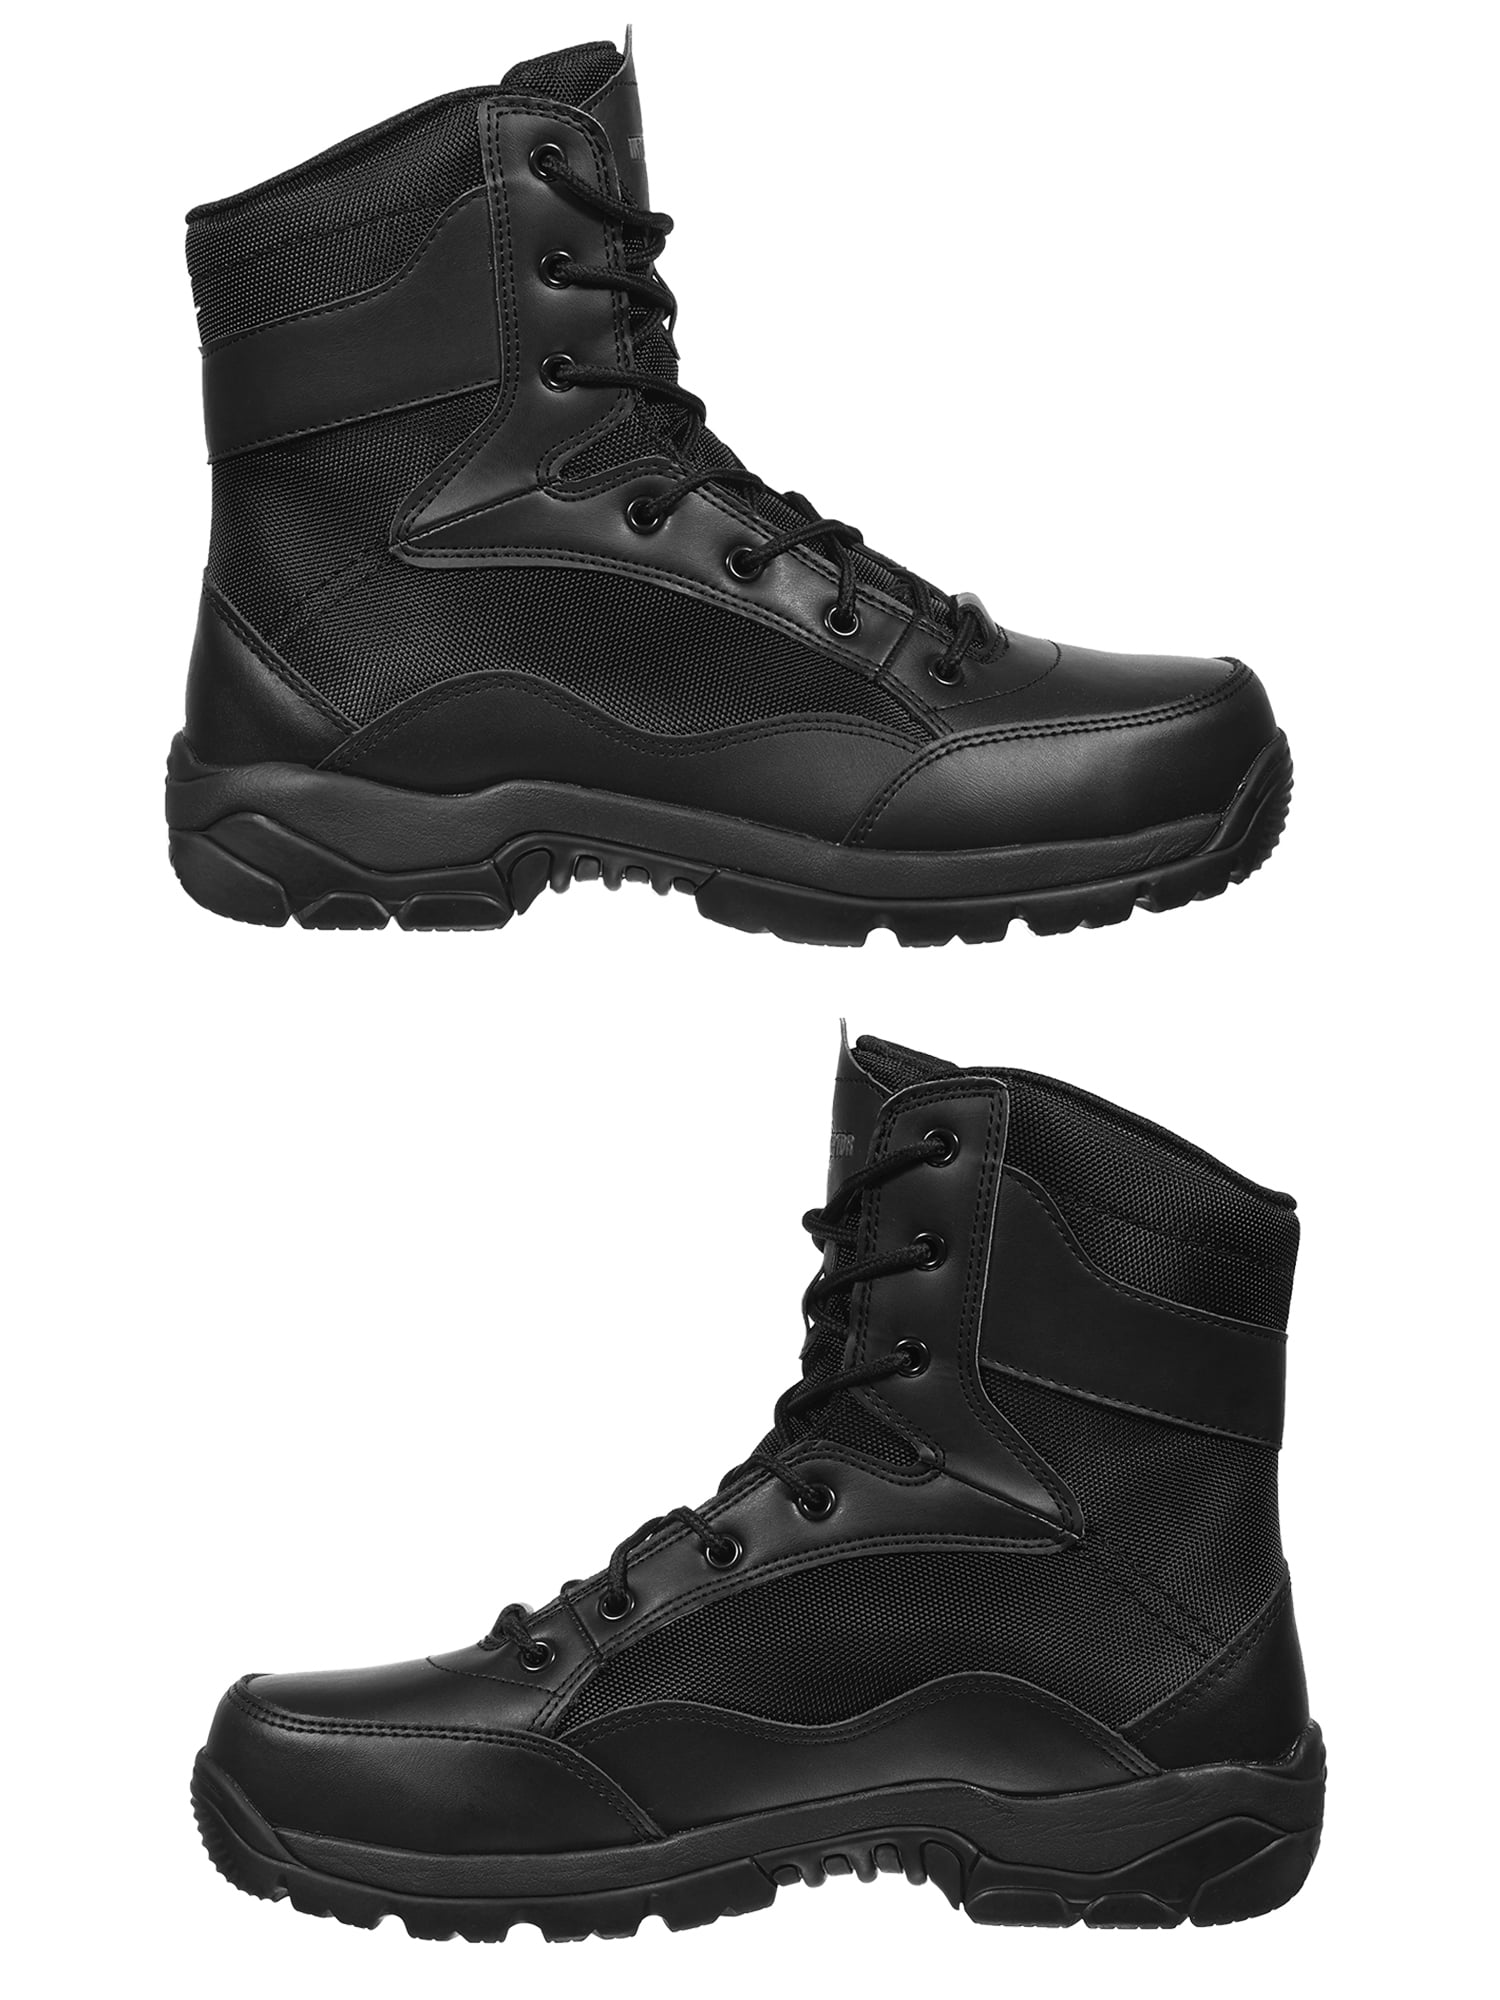 Interceptor Men's Force Tactical Steel Toe Work Boots, Black Leather